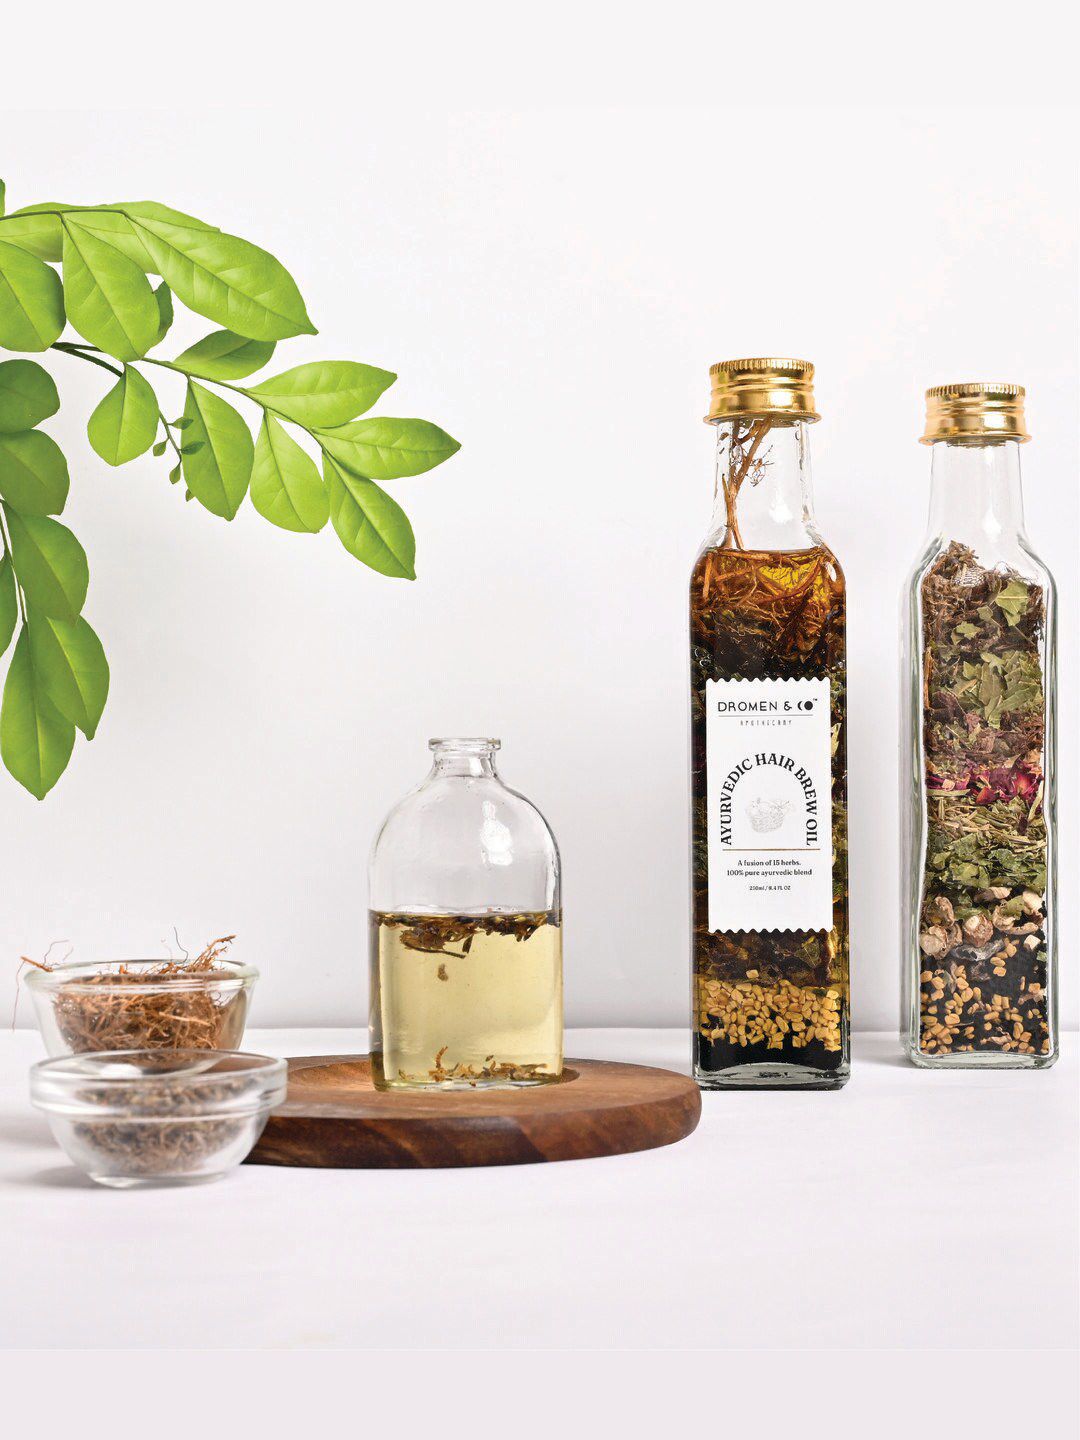 DROMEN & CO Ayurvedic Hair Brew Oil with 15 Herbs 250 ml Price in India